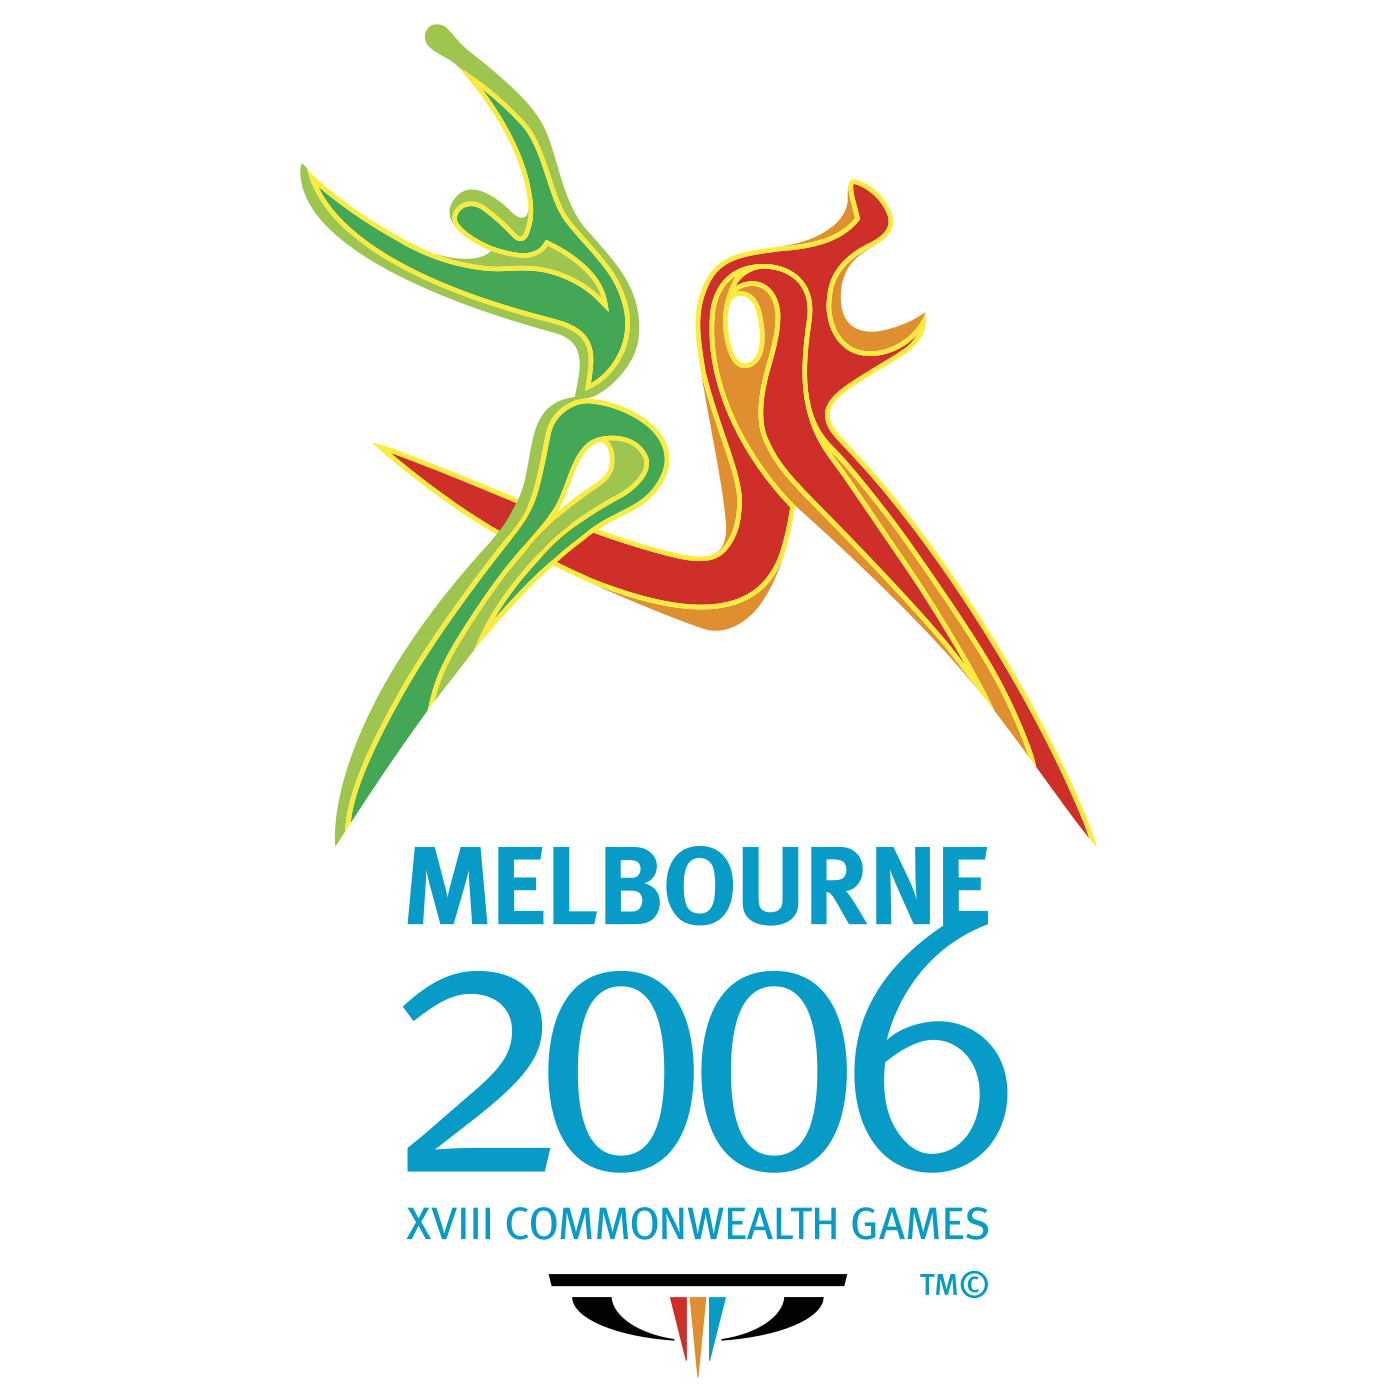 XVIII Commonwealth Games 2006